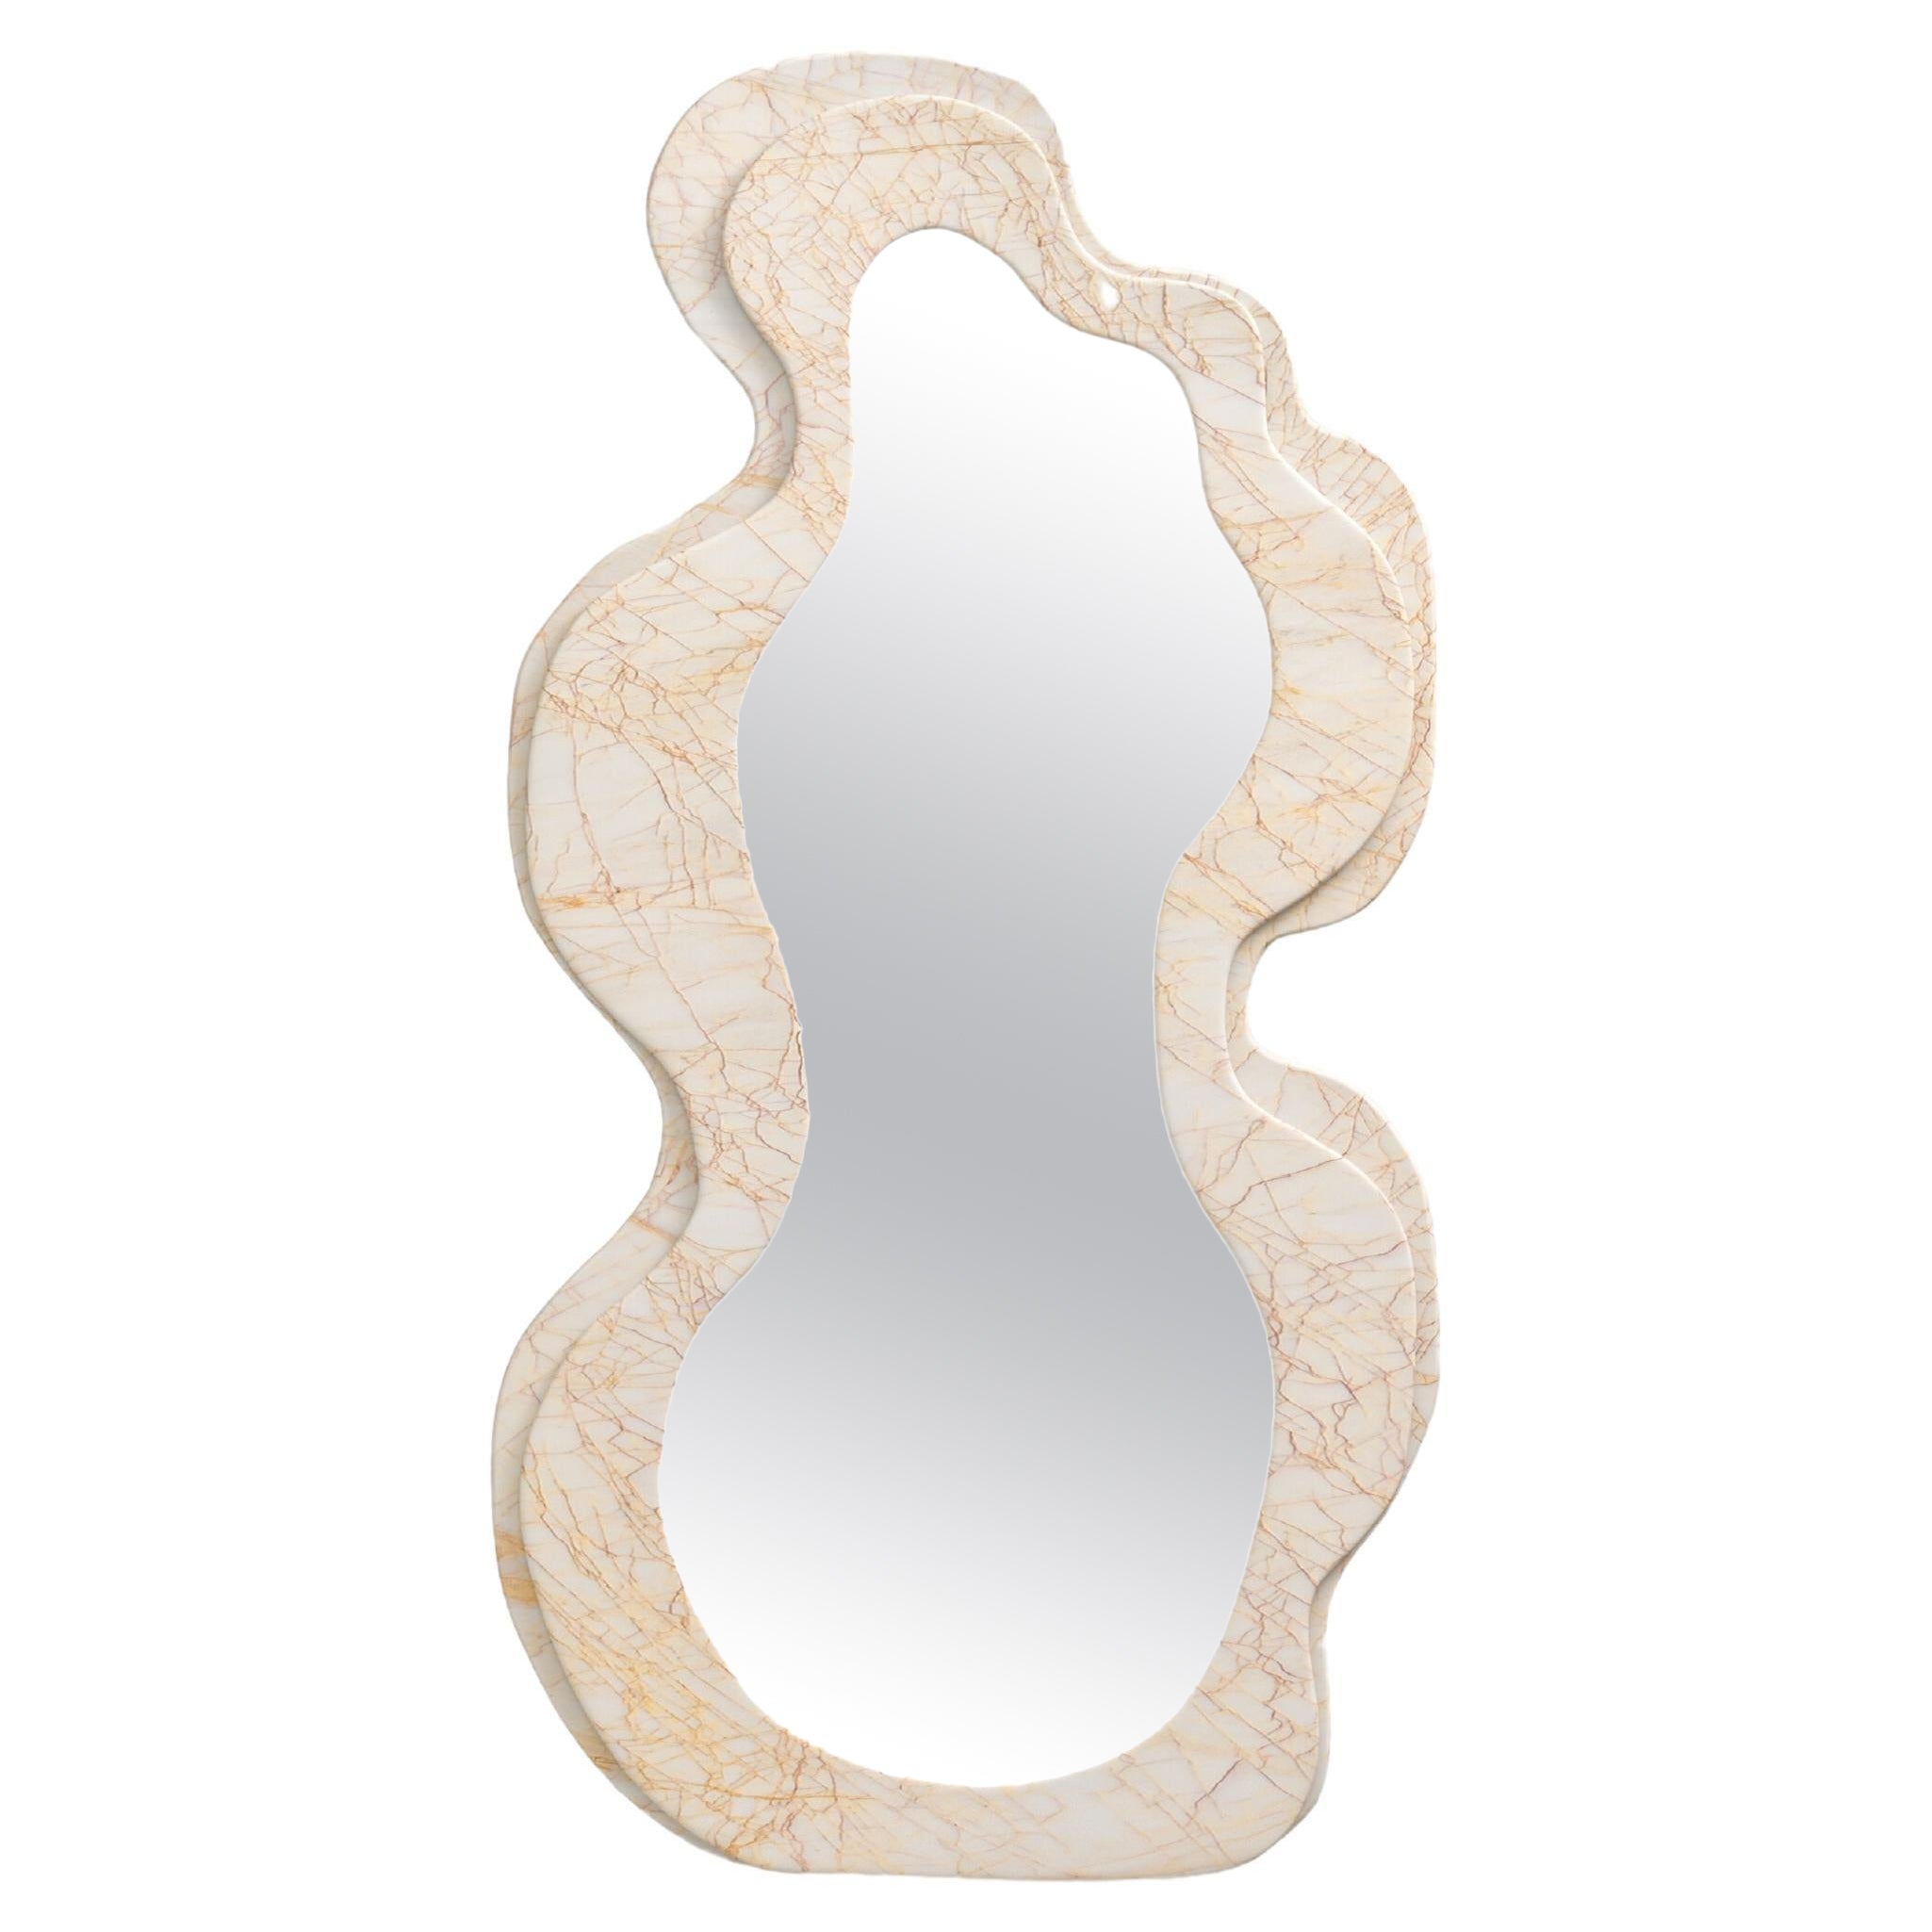 FORM(LA) Onda Floor Mirror 78”H x 42”W x 1.5”D Golden Spider Marble For Sale